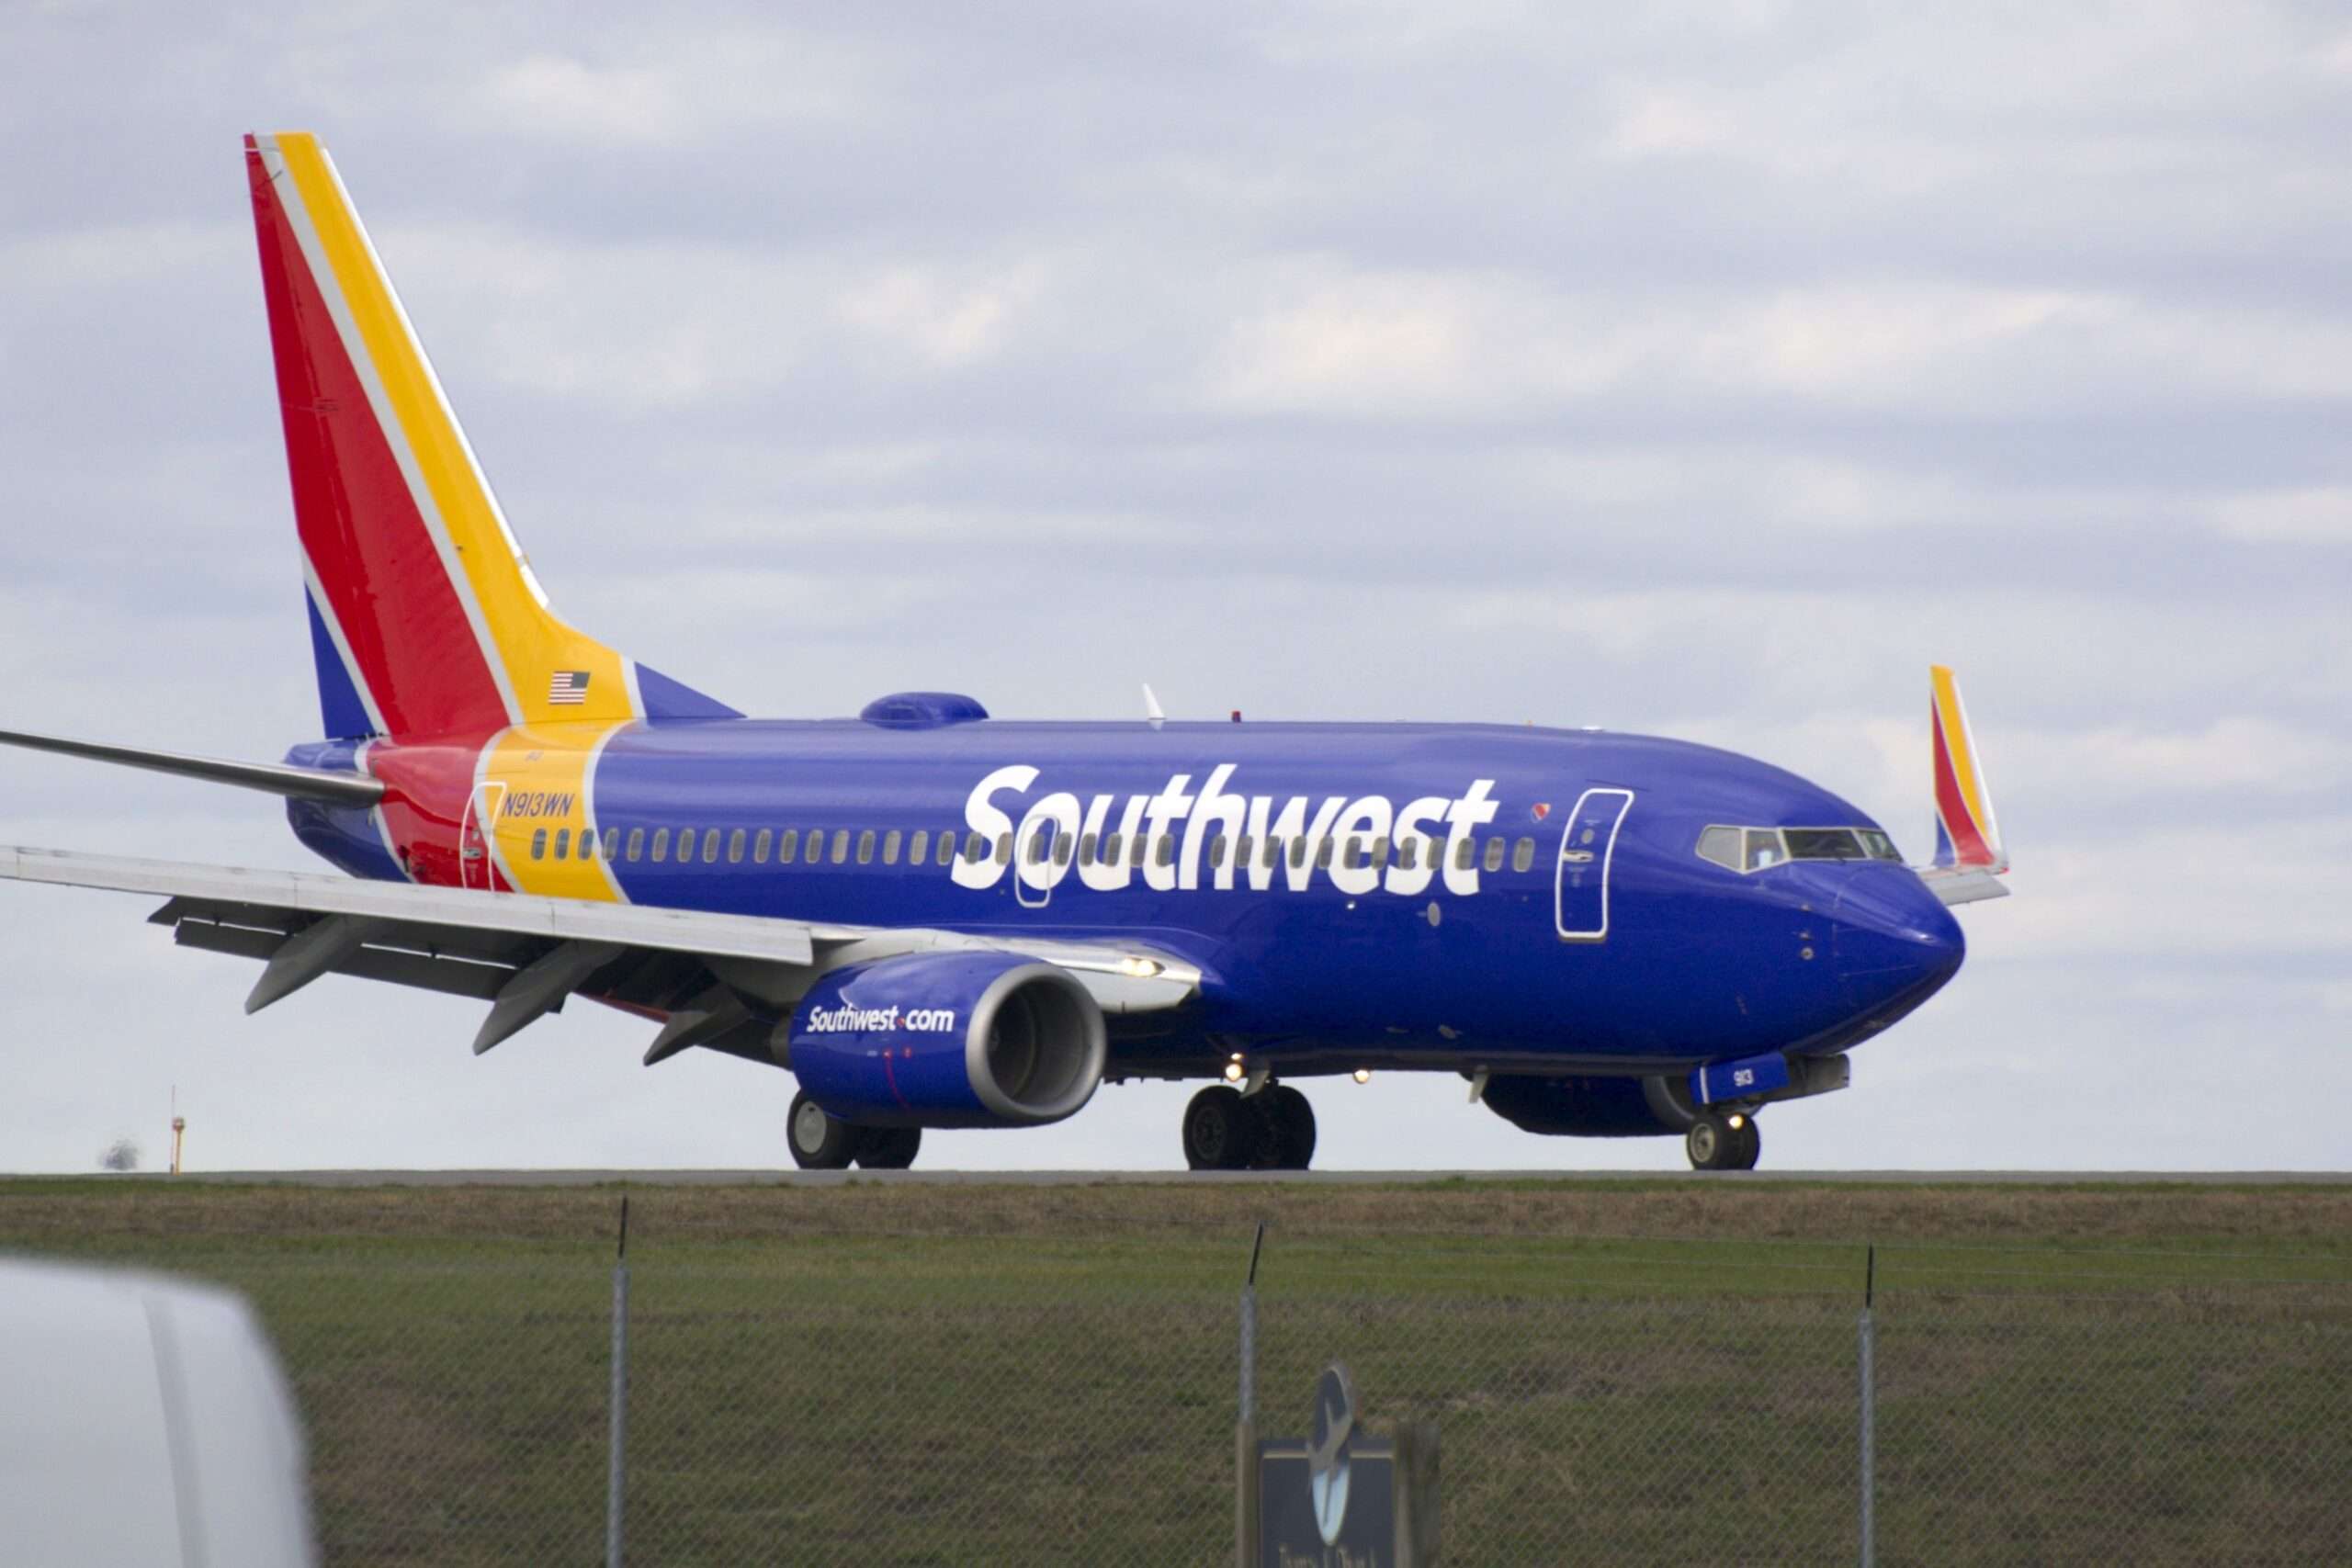 Bird Strike: Reports of Fire on Southwest Flight From Burbank To Sacramento